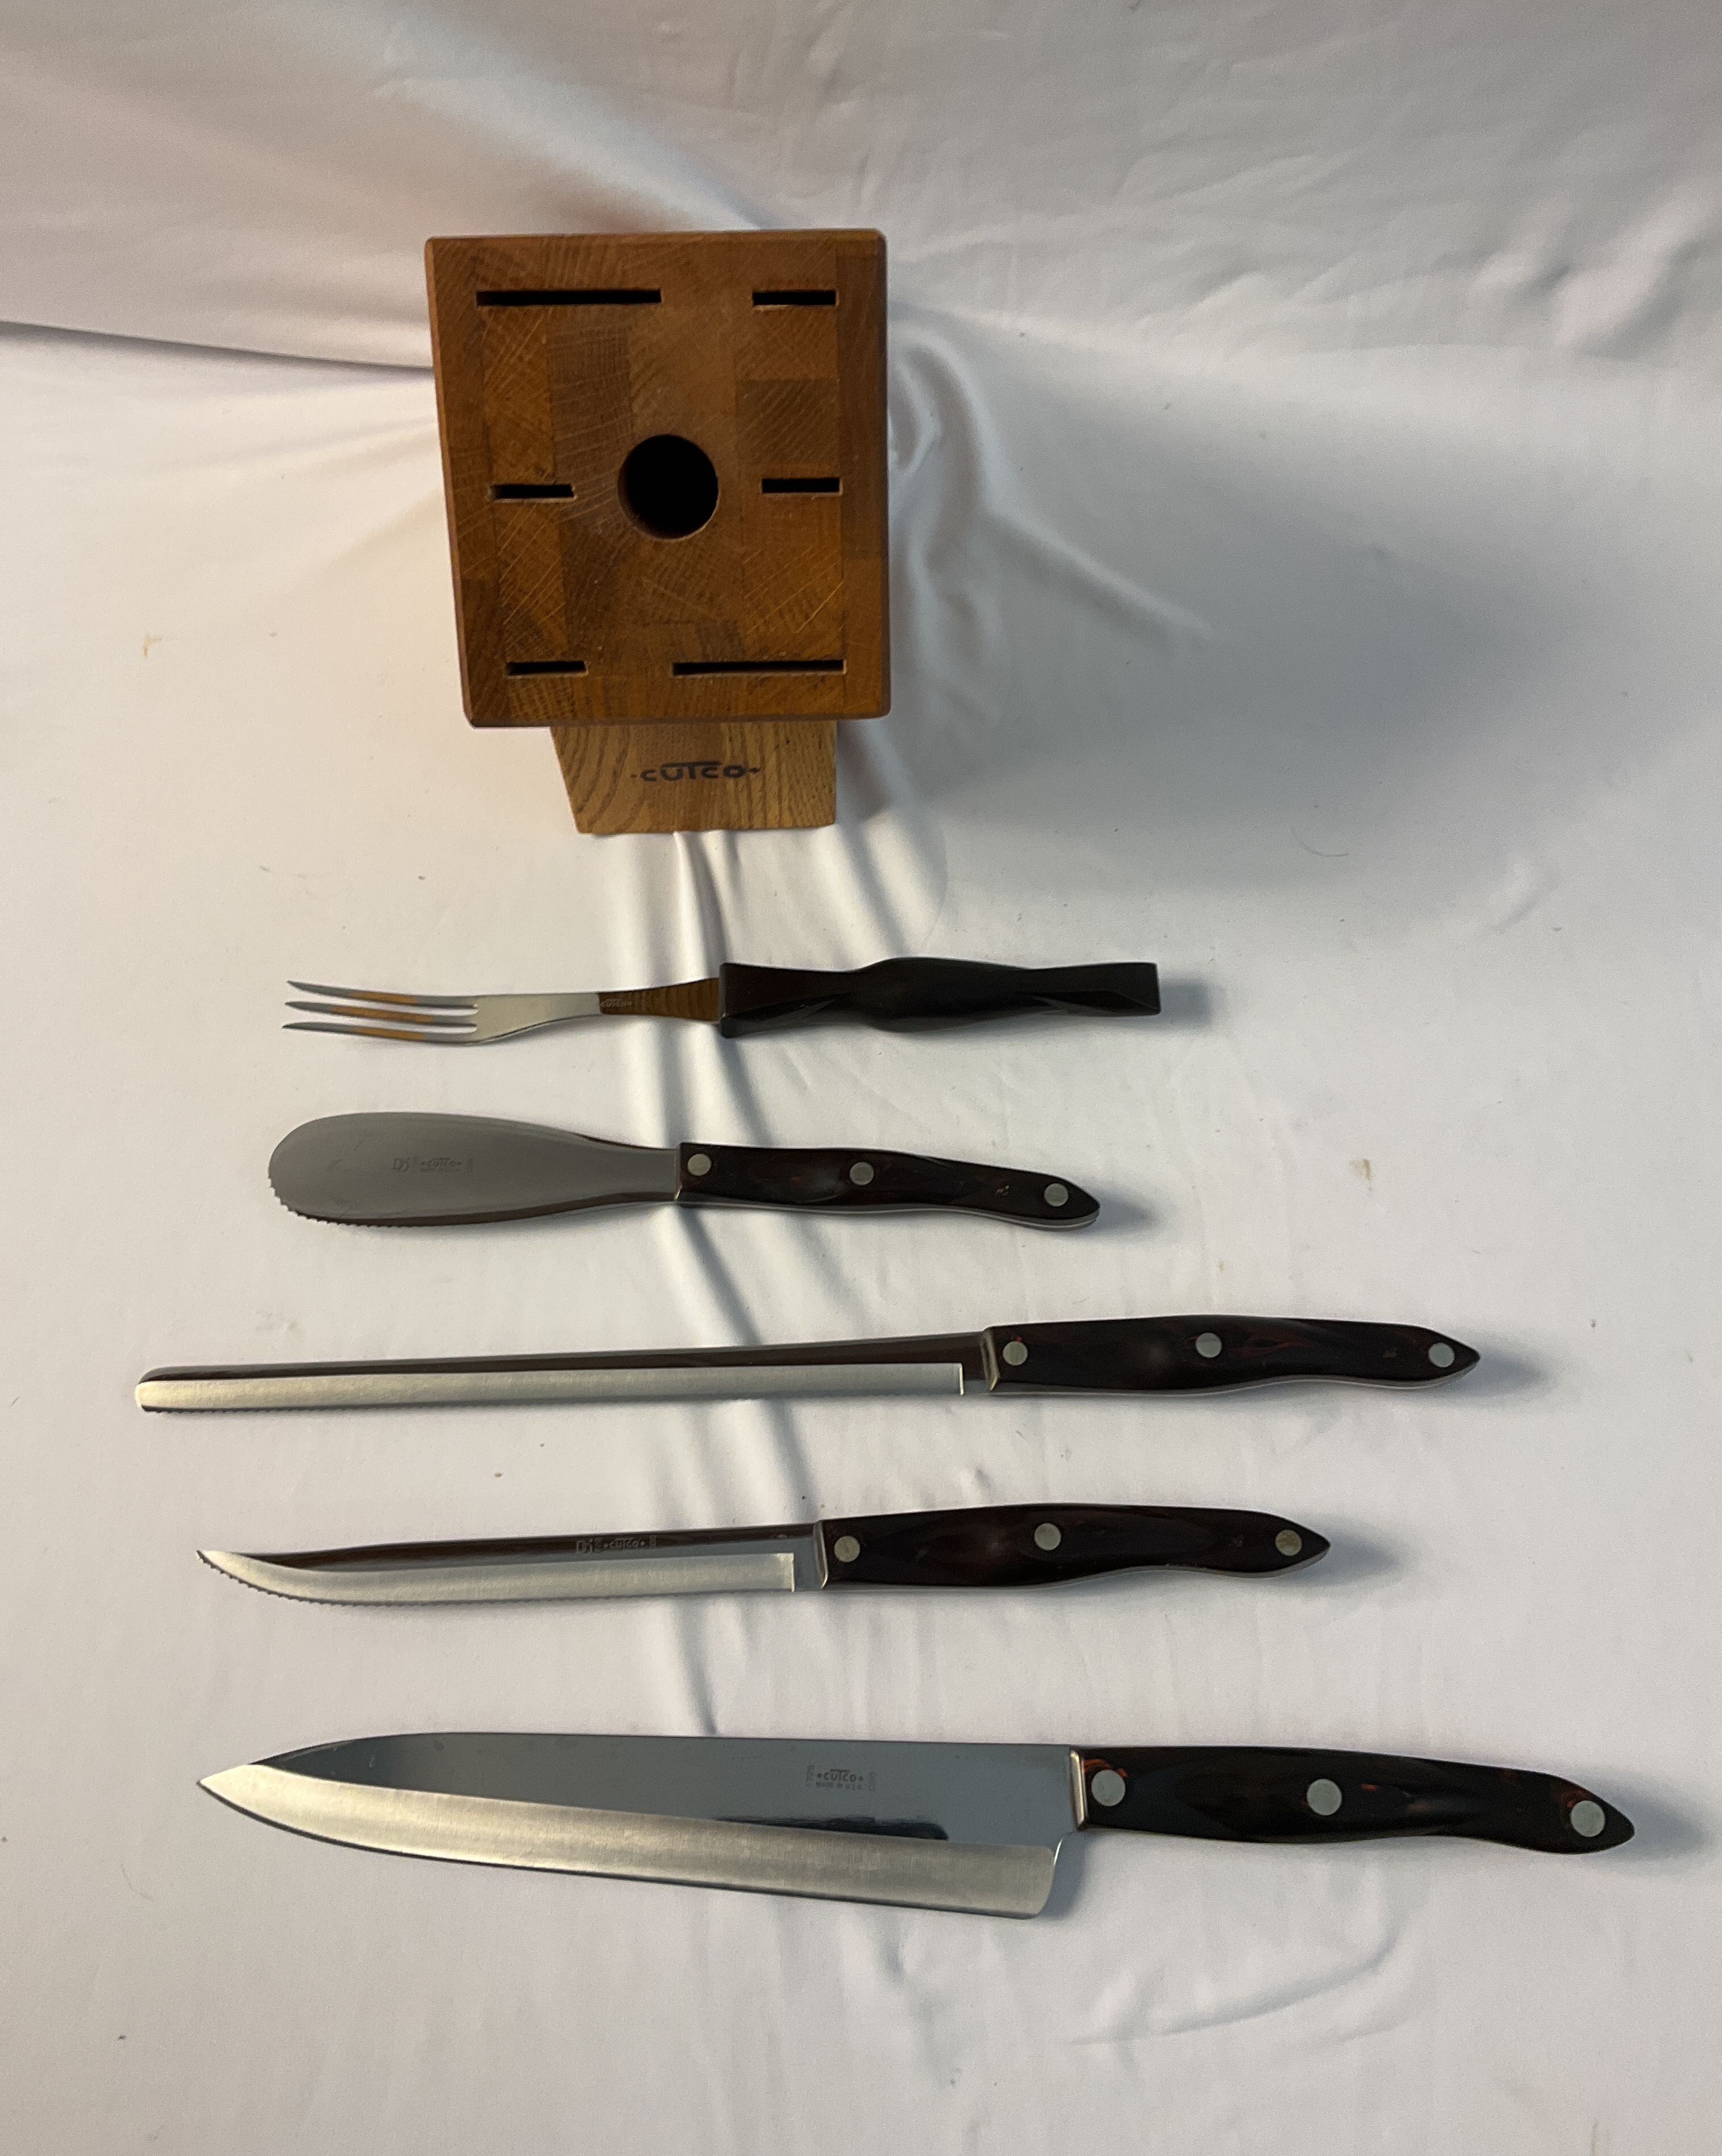 Cutco knife holder and vintage Cutco knives